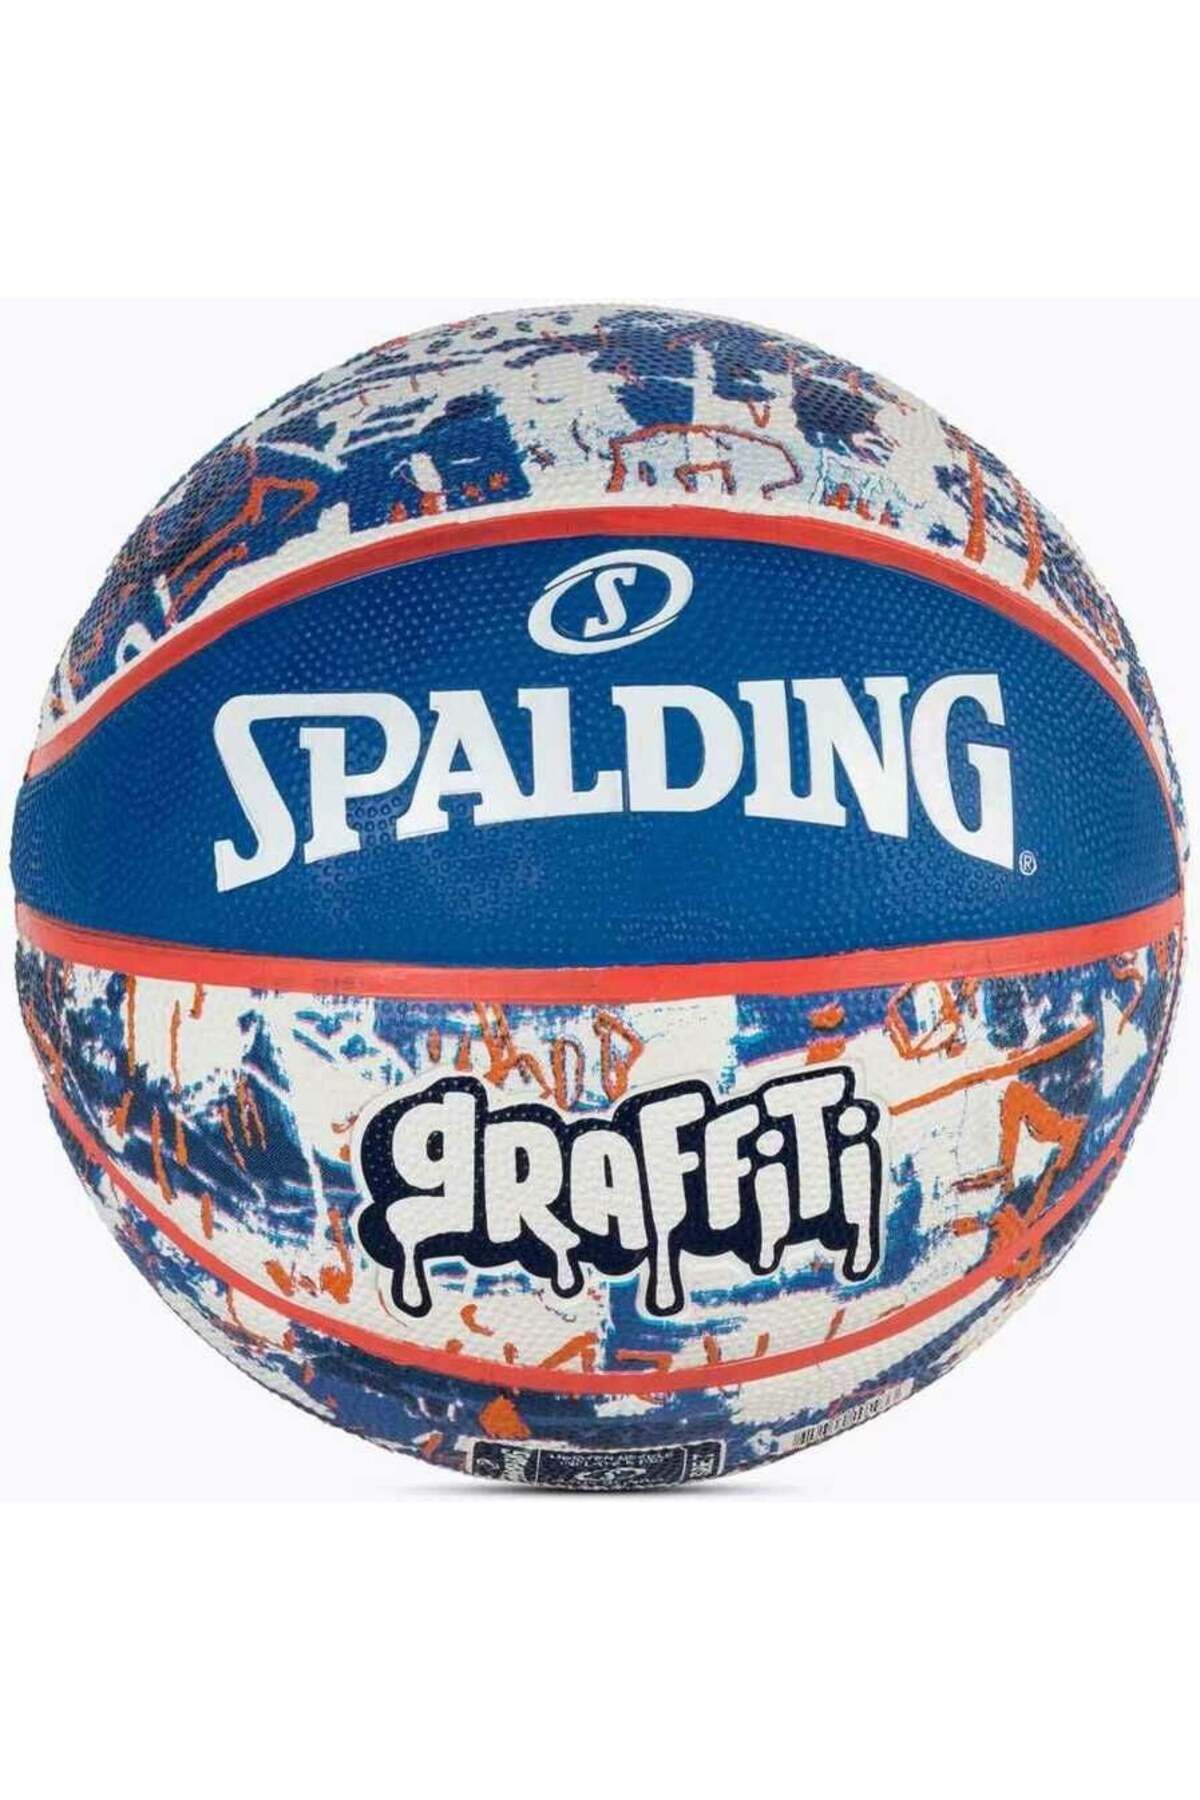 Spalding Blue Red Graffiti Sz7 2021 Basket Topu 84377z